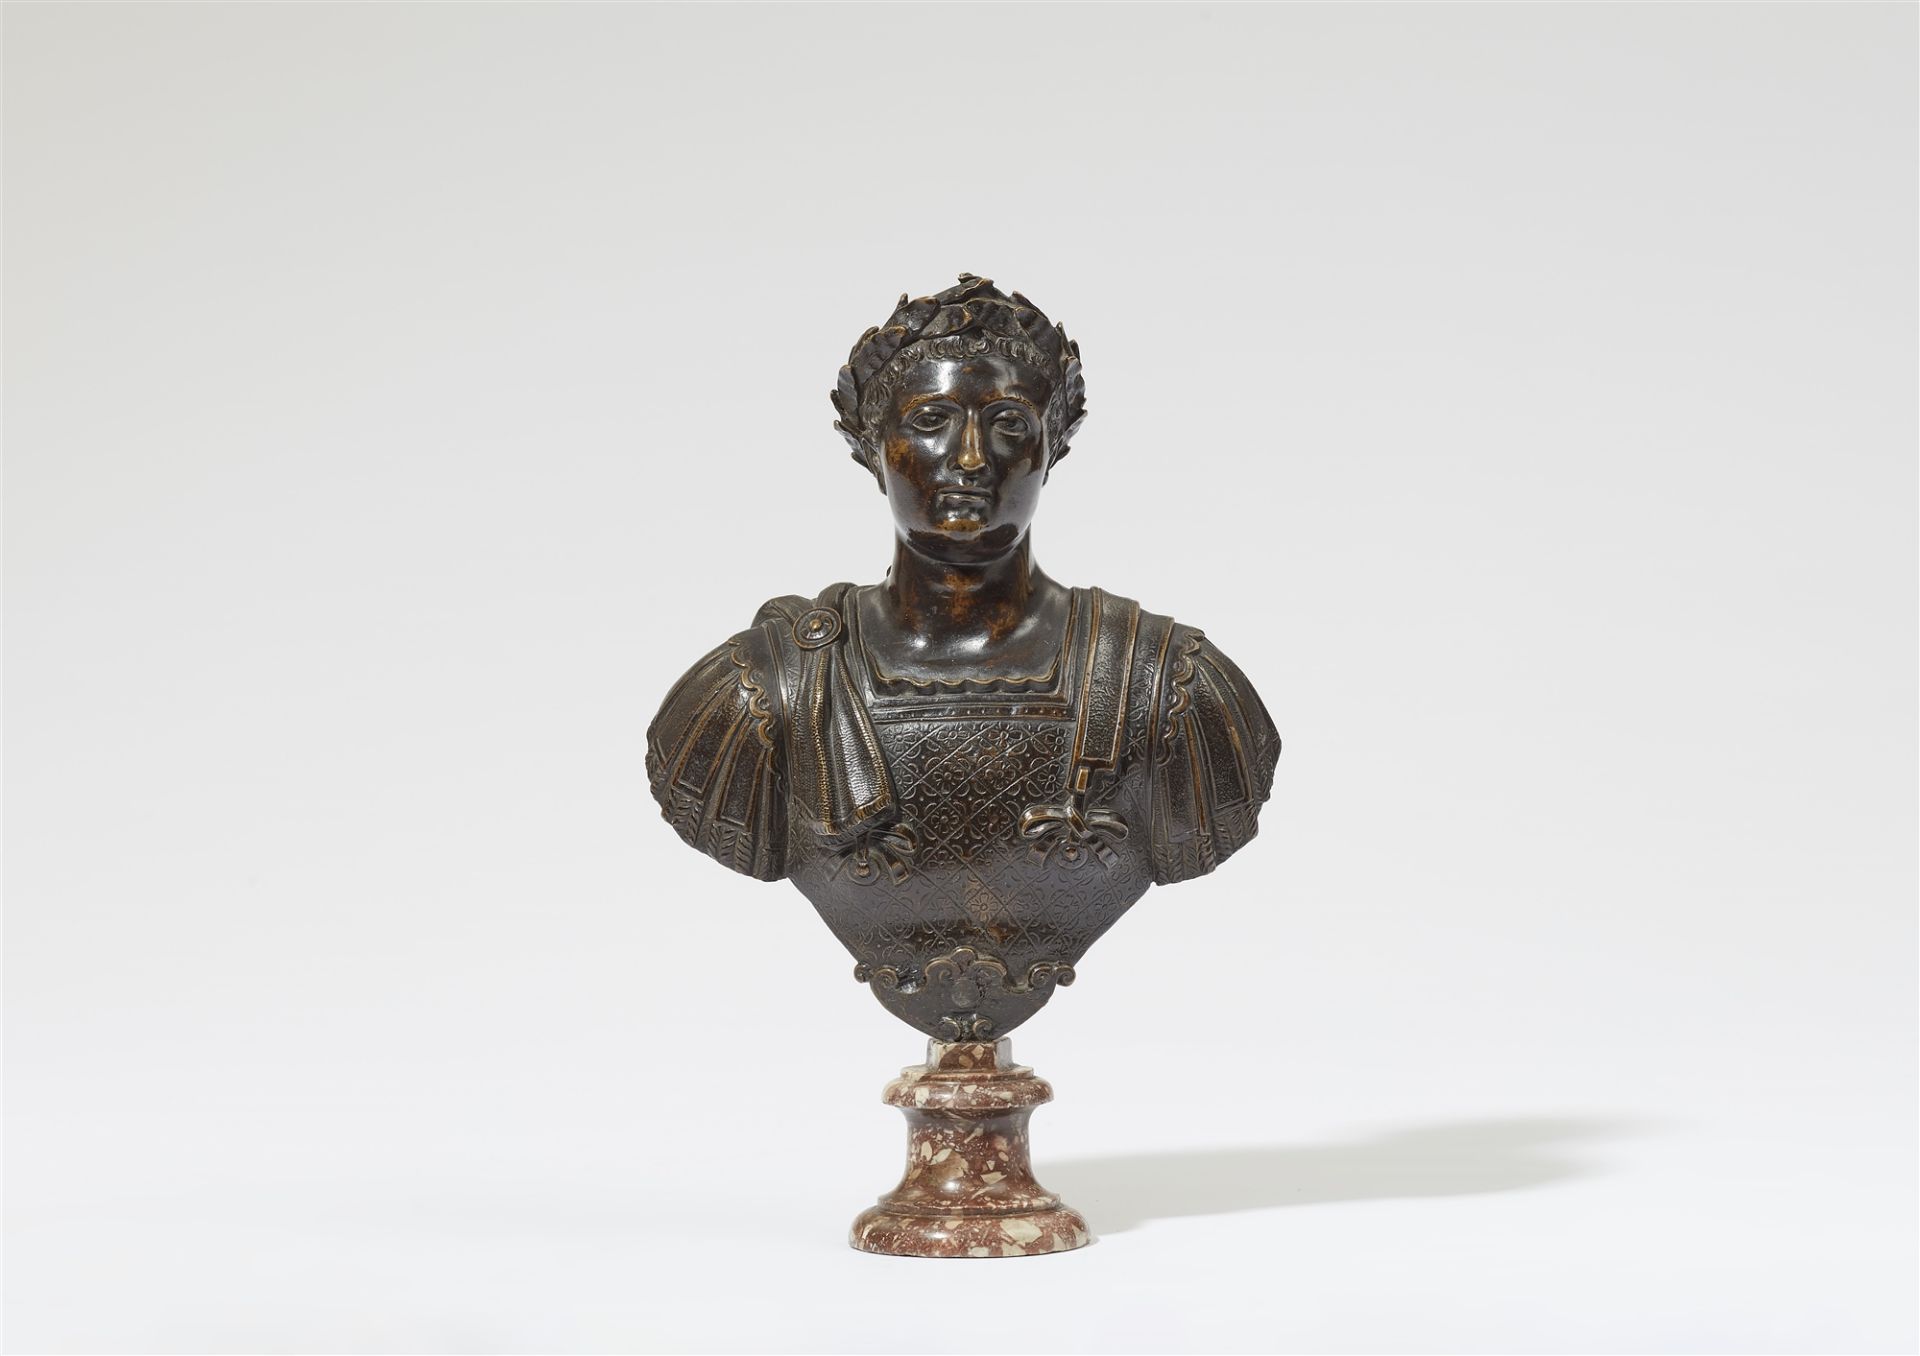 A bronze bust of a Roman Emperor